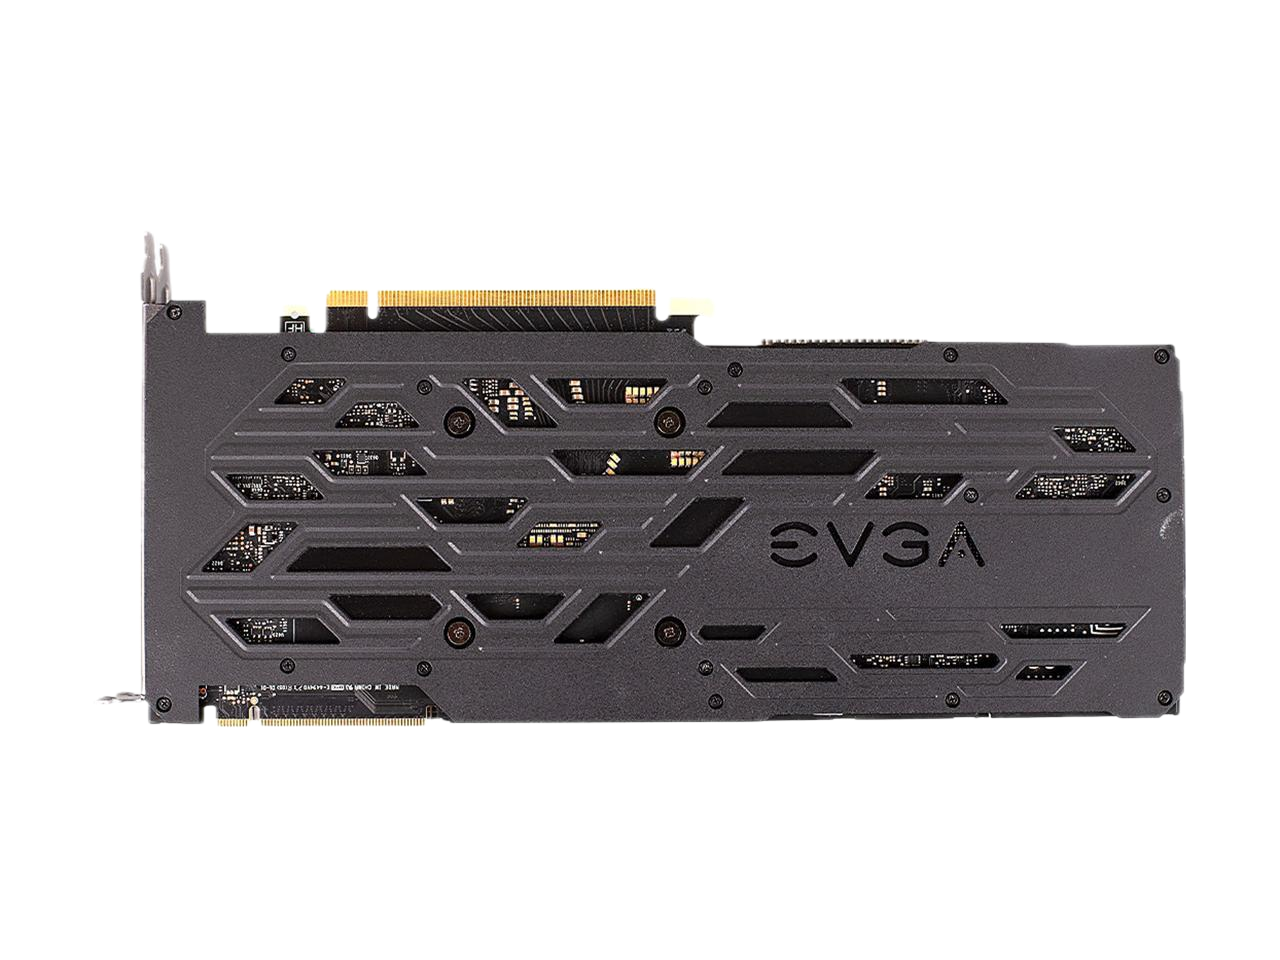 EVGA GeForce RTX 2080 XC GAMING 8GB GDDR6 Dual HDB Fans & RGB LED Video Graphics Card 08G-P4-2182-KR